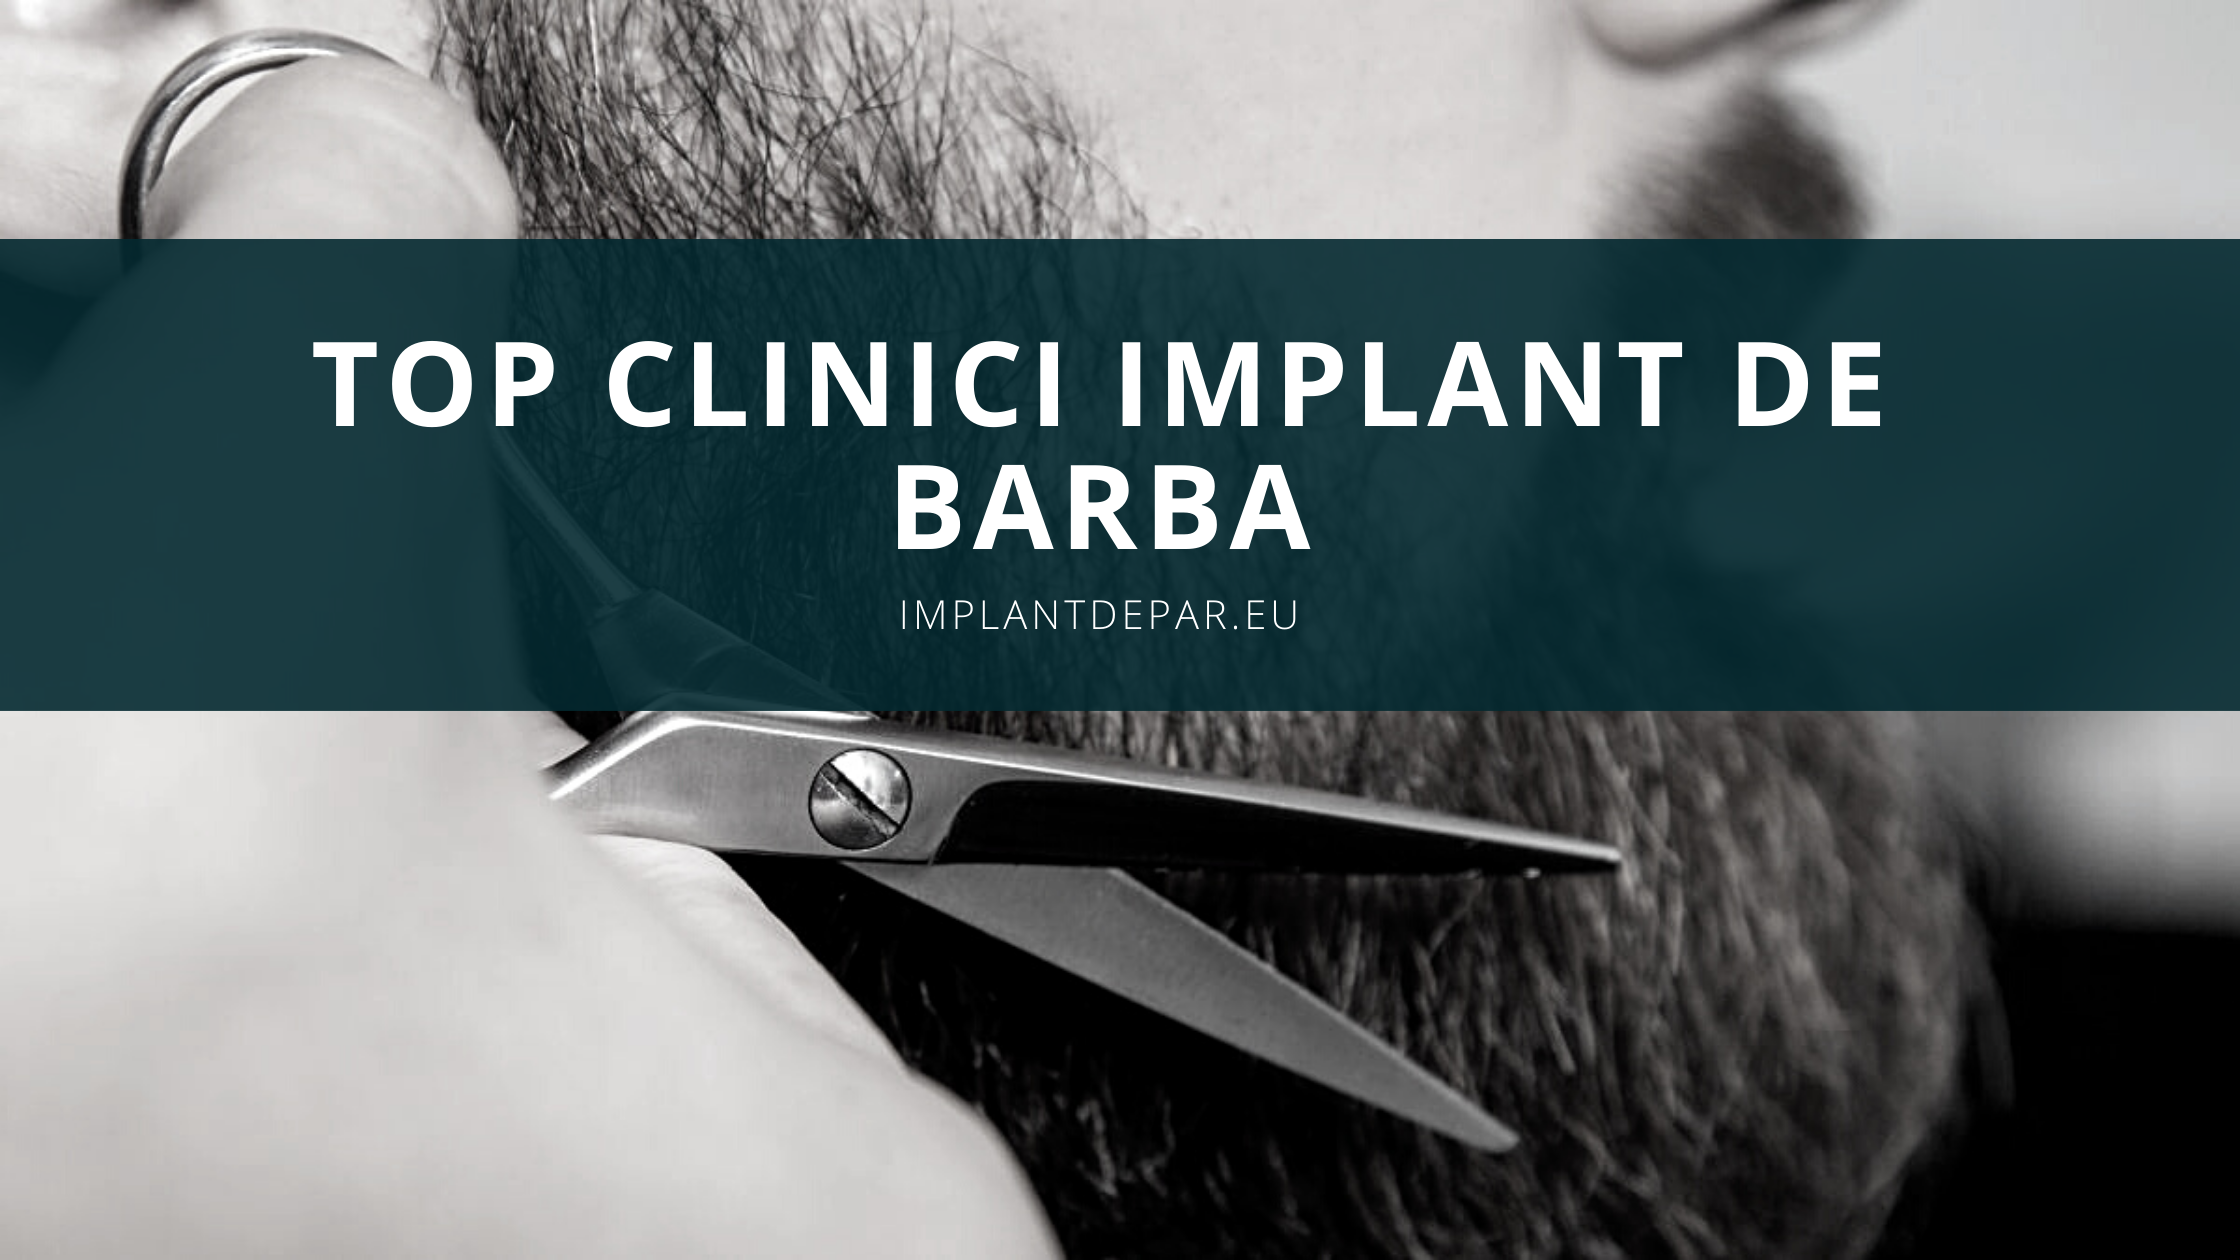 Transplant de Barba – Top clinici Implant Barba in 2022